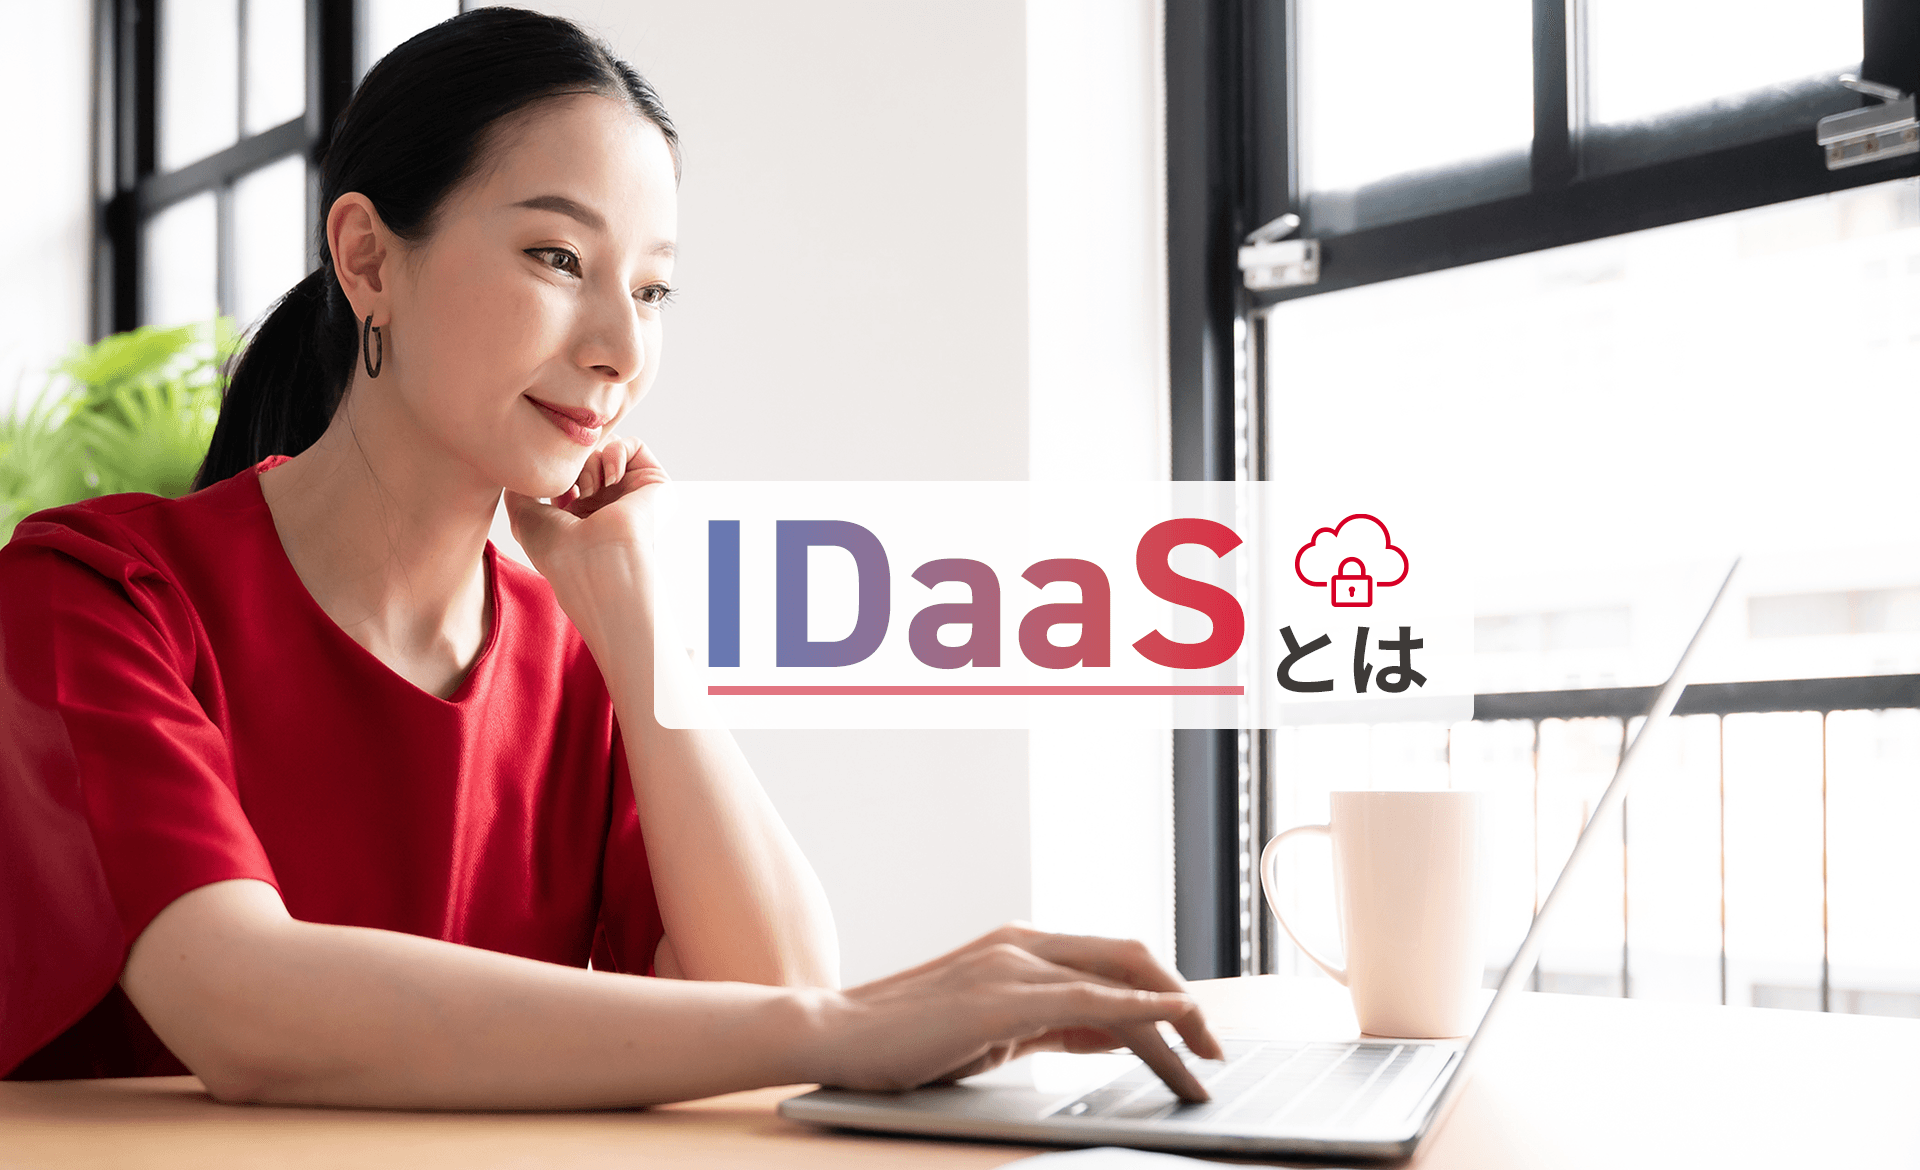 IDaaSとは？機能や導入するメリット・デメリット、比較ポイントを解説